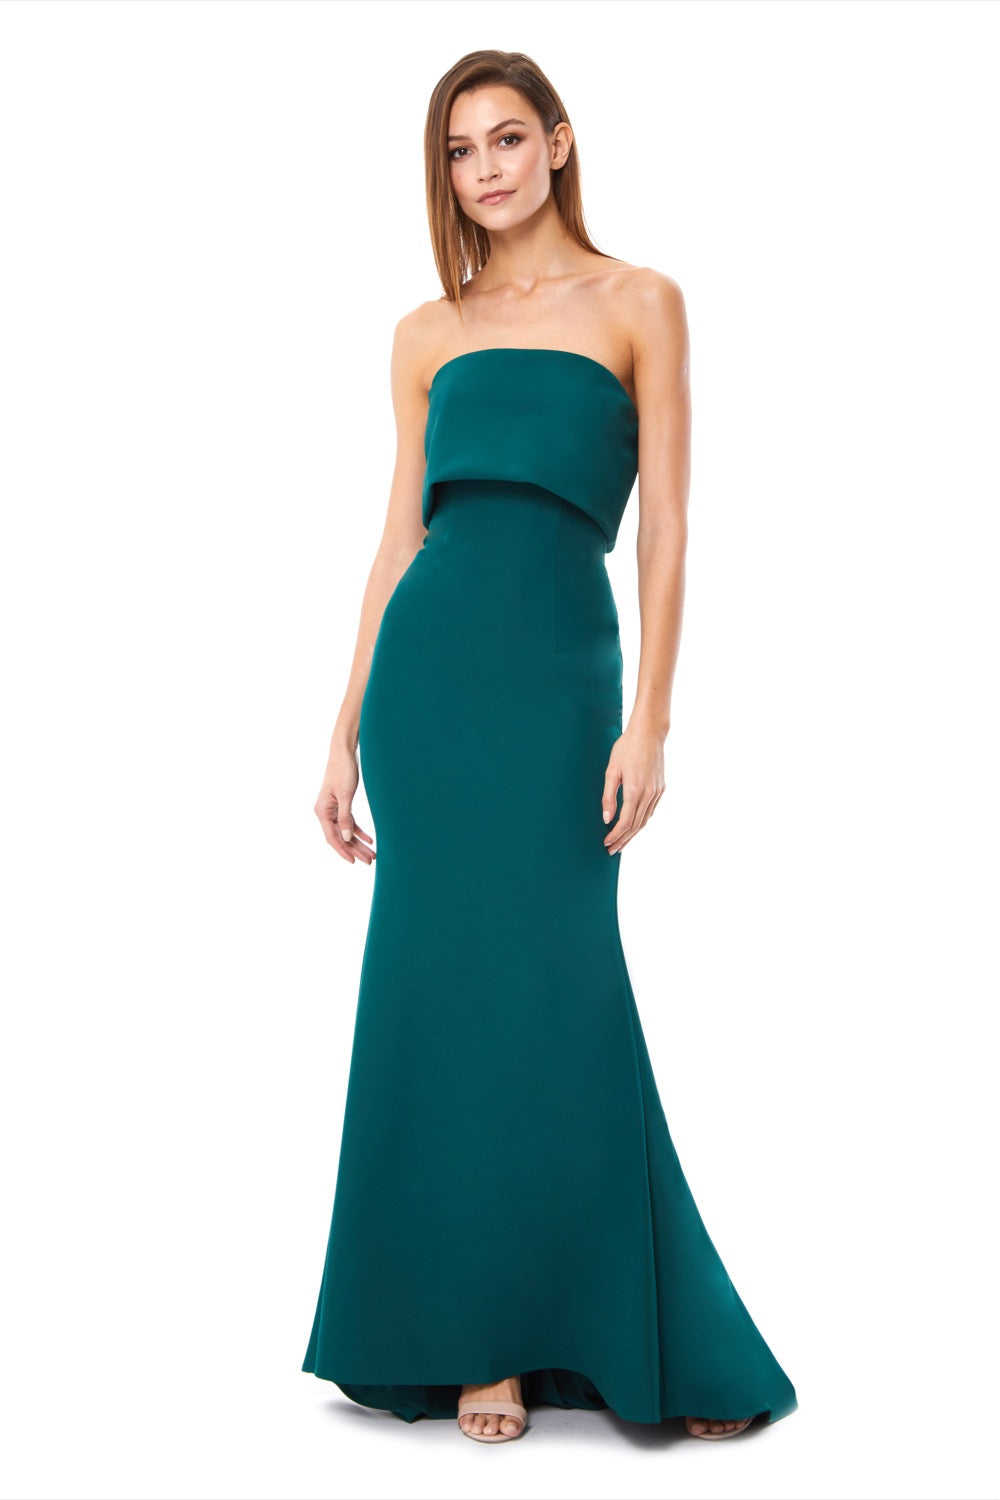 Blaze Strapless Maxi Dress With Overlay, UK 12 / US 8 / EU 40 / Dark Green